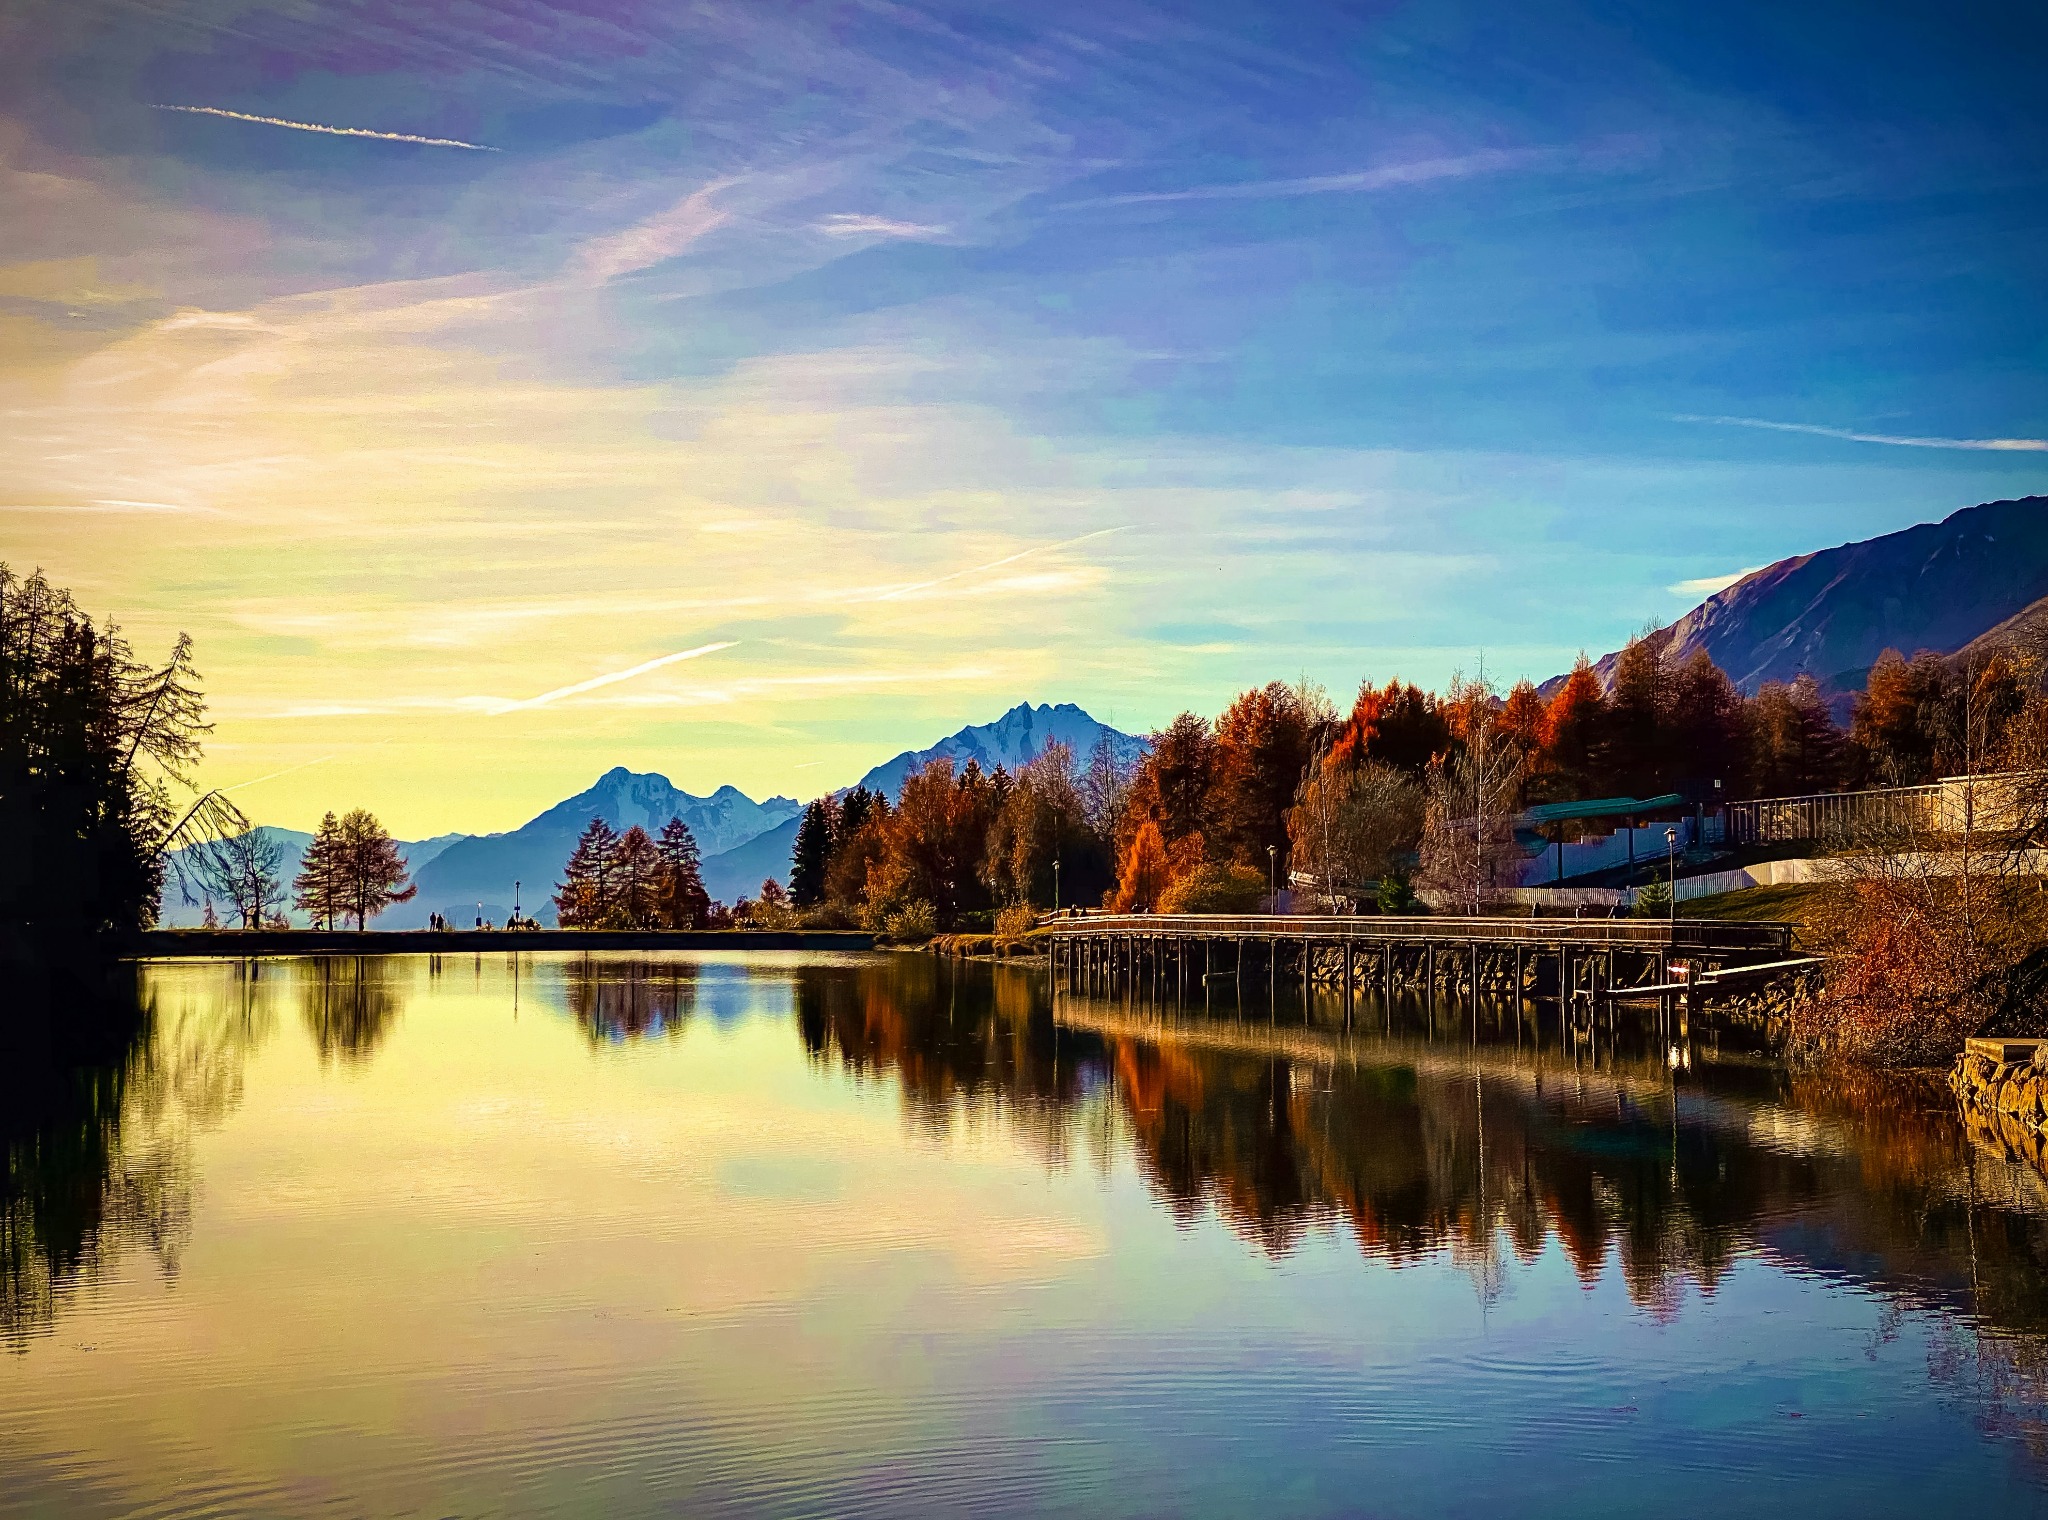 Autumn lake reflection